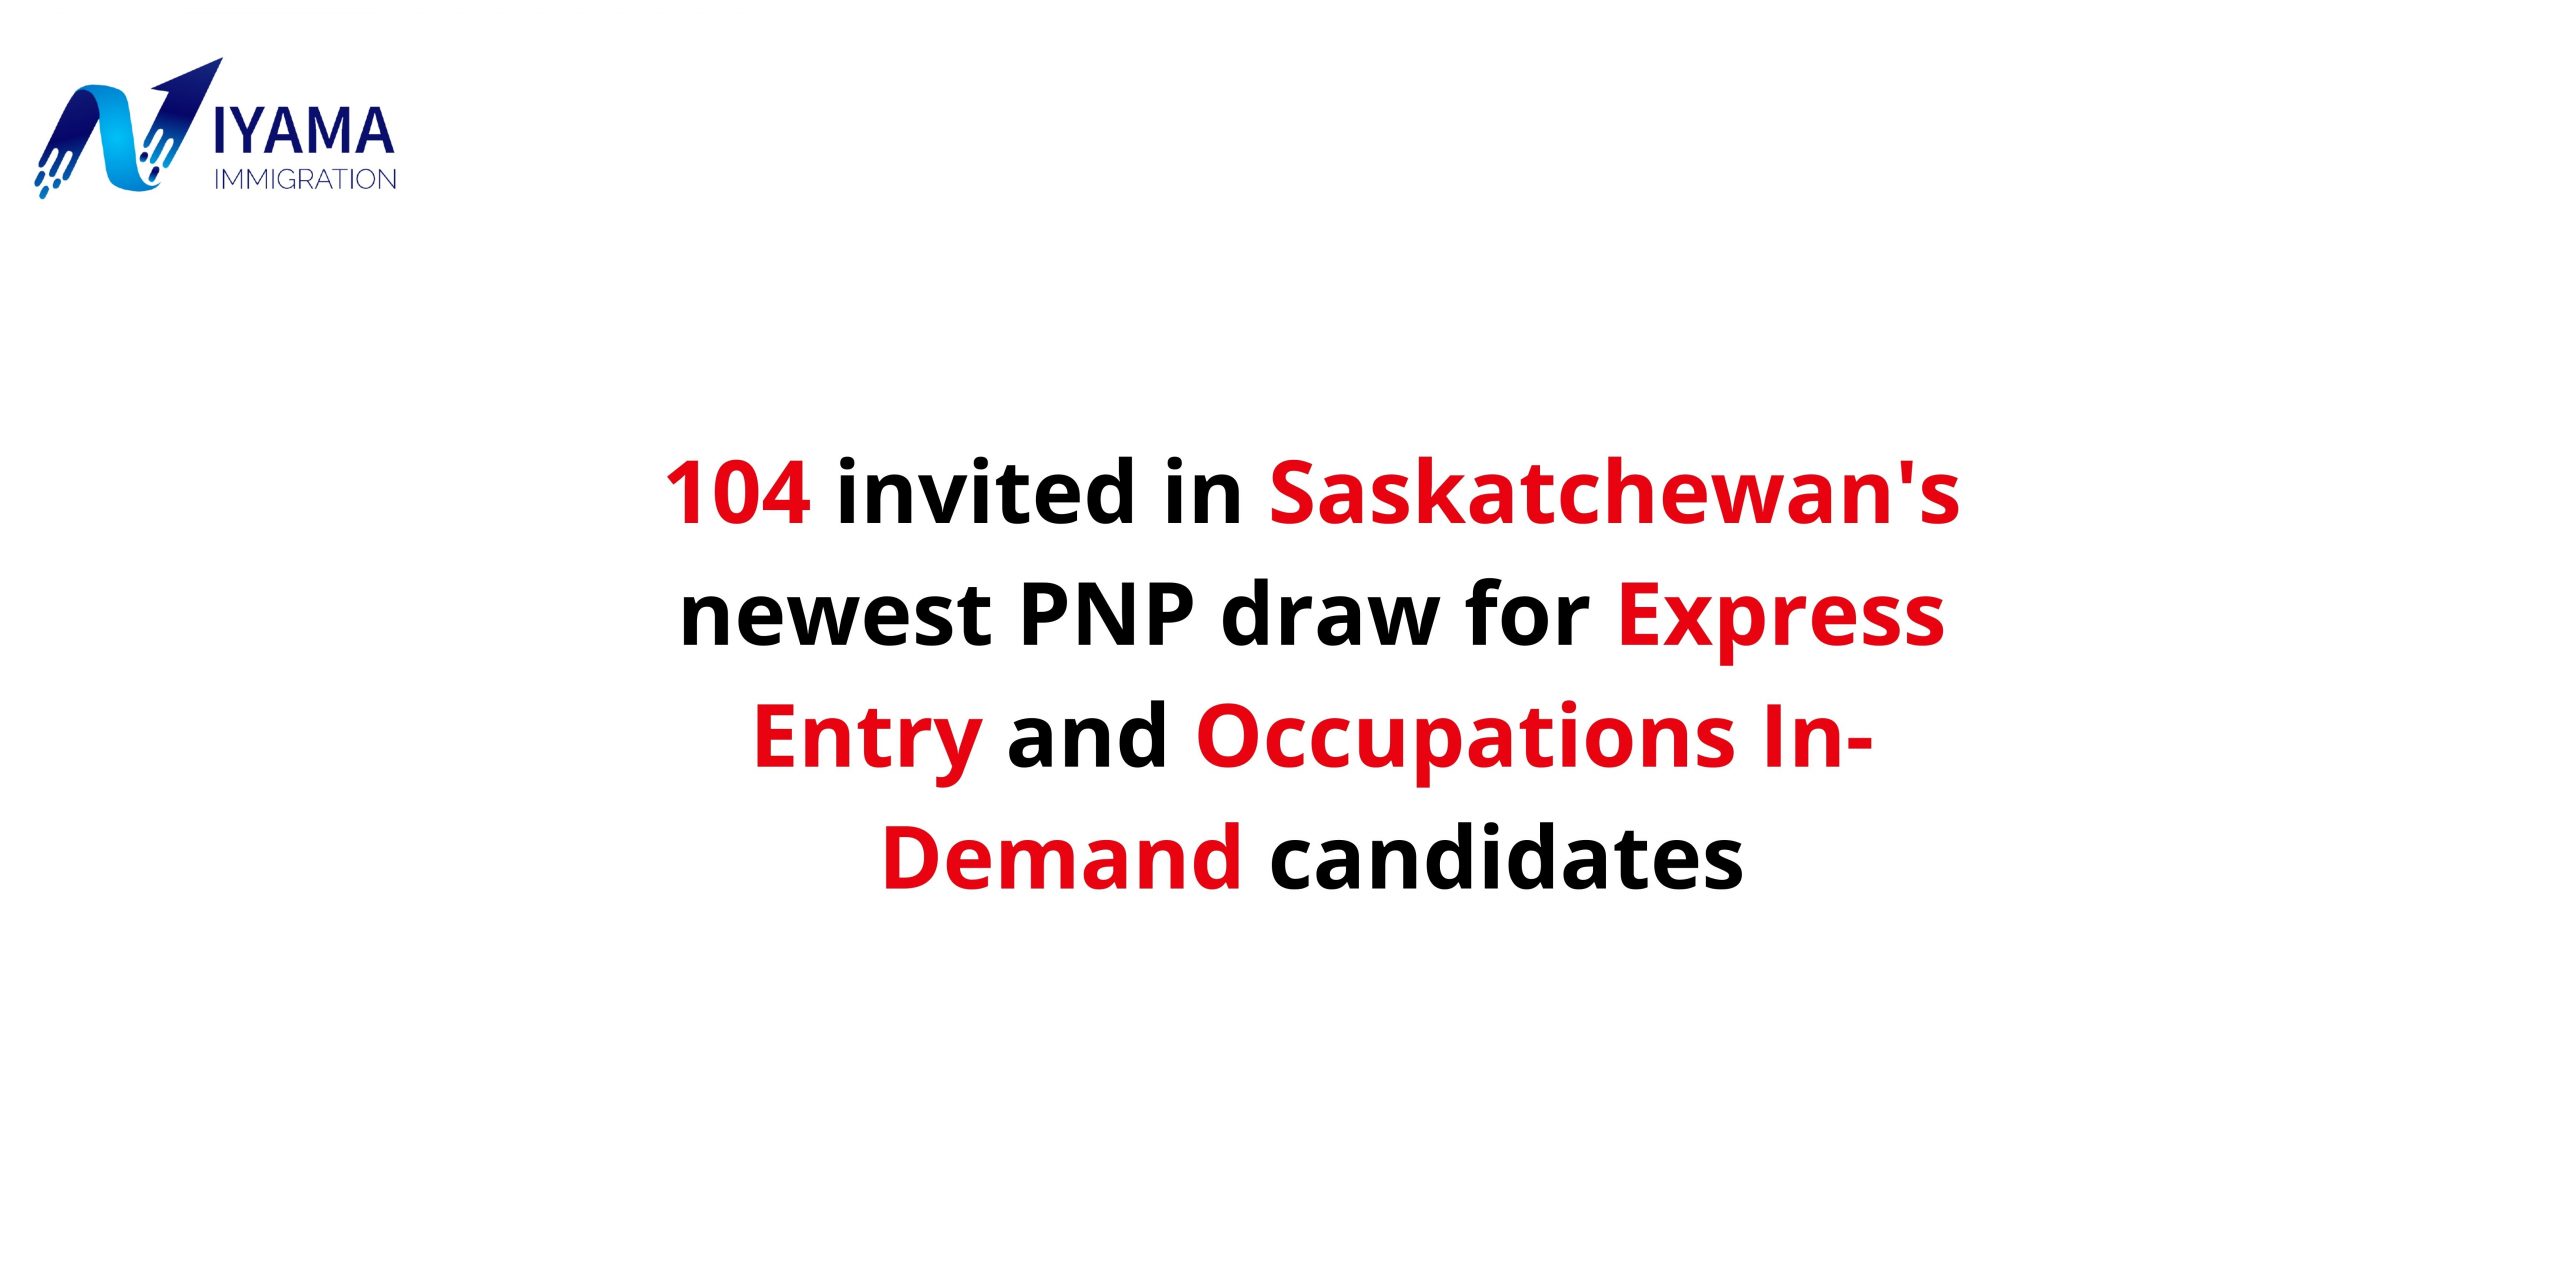 104 Invitations Issued By Saskatchewan PNP In Latest Draw